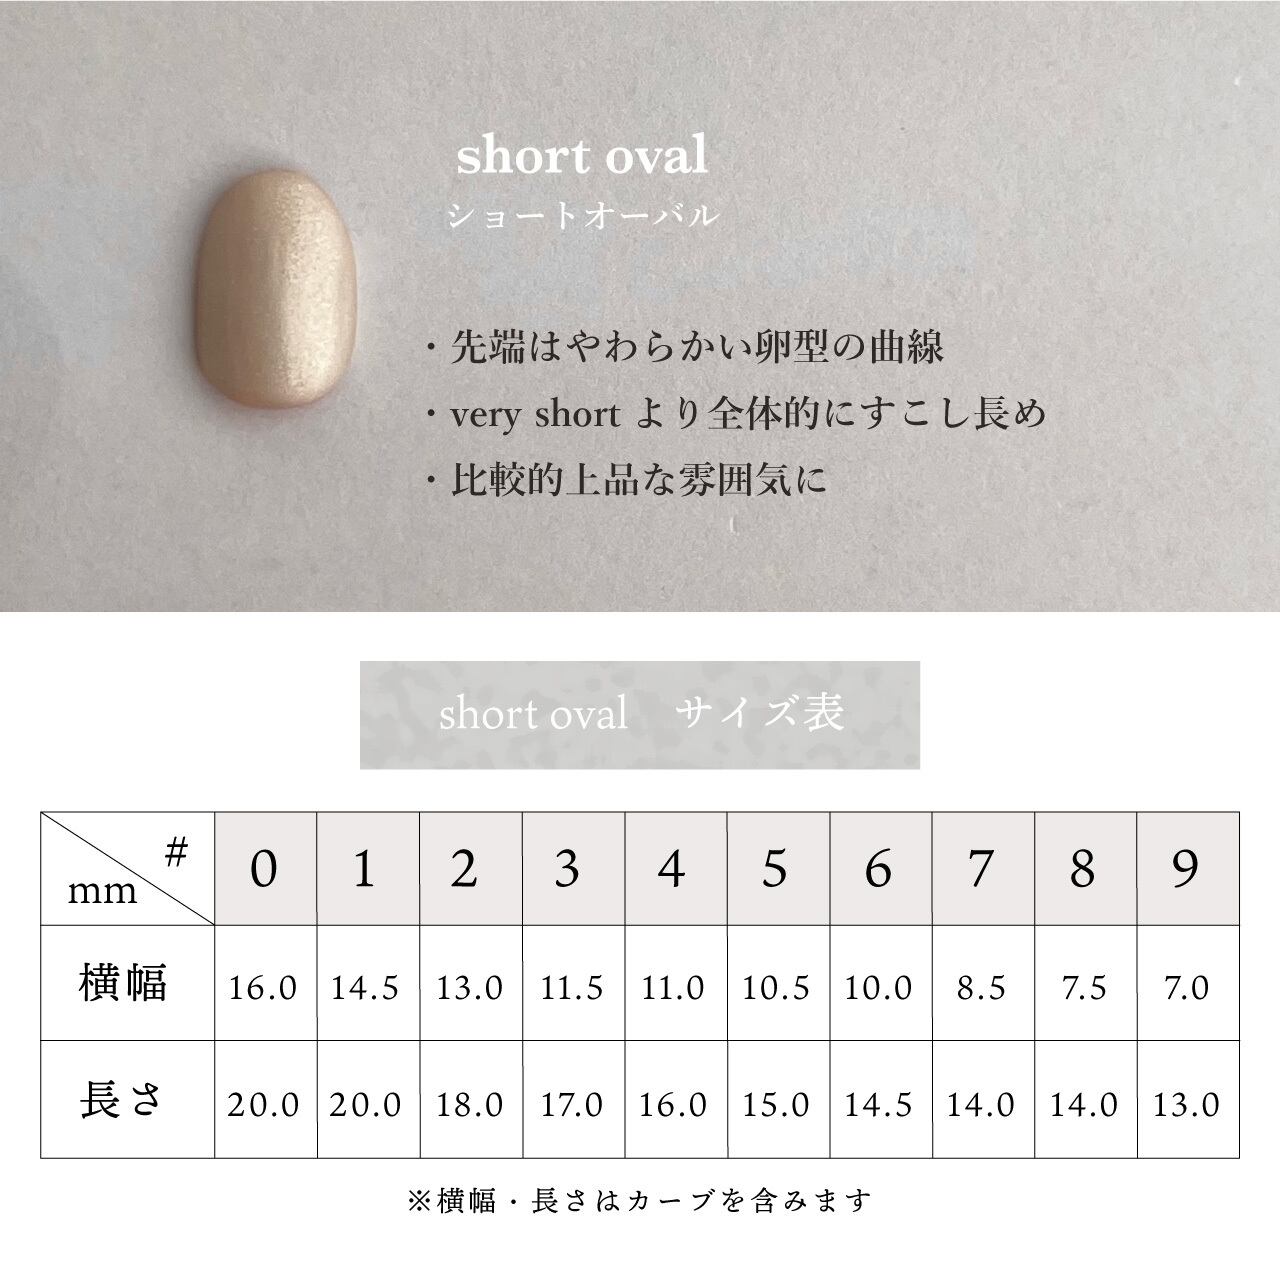 Hand nail tips 5 | s o u ｜カジュアルなオーダーメイドネイルチップ